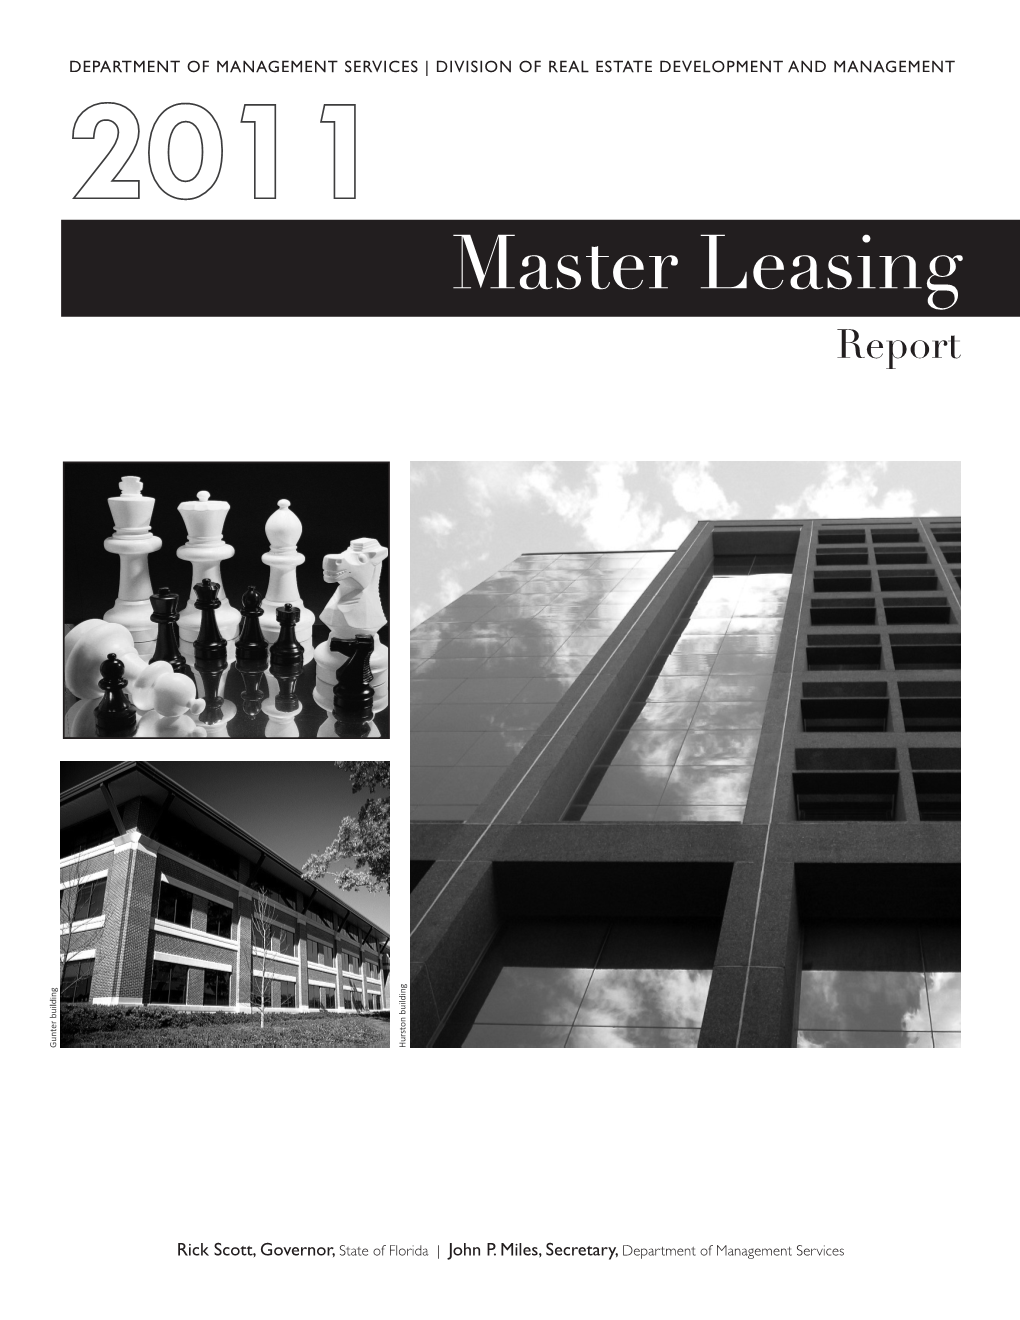 Master Leasing Report Gunter Building Gunter Building Hurston